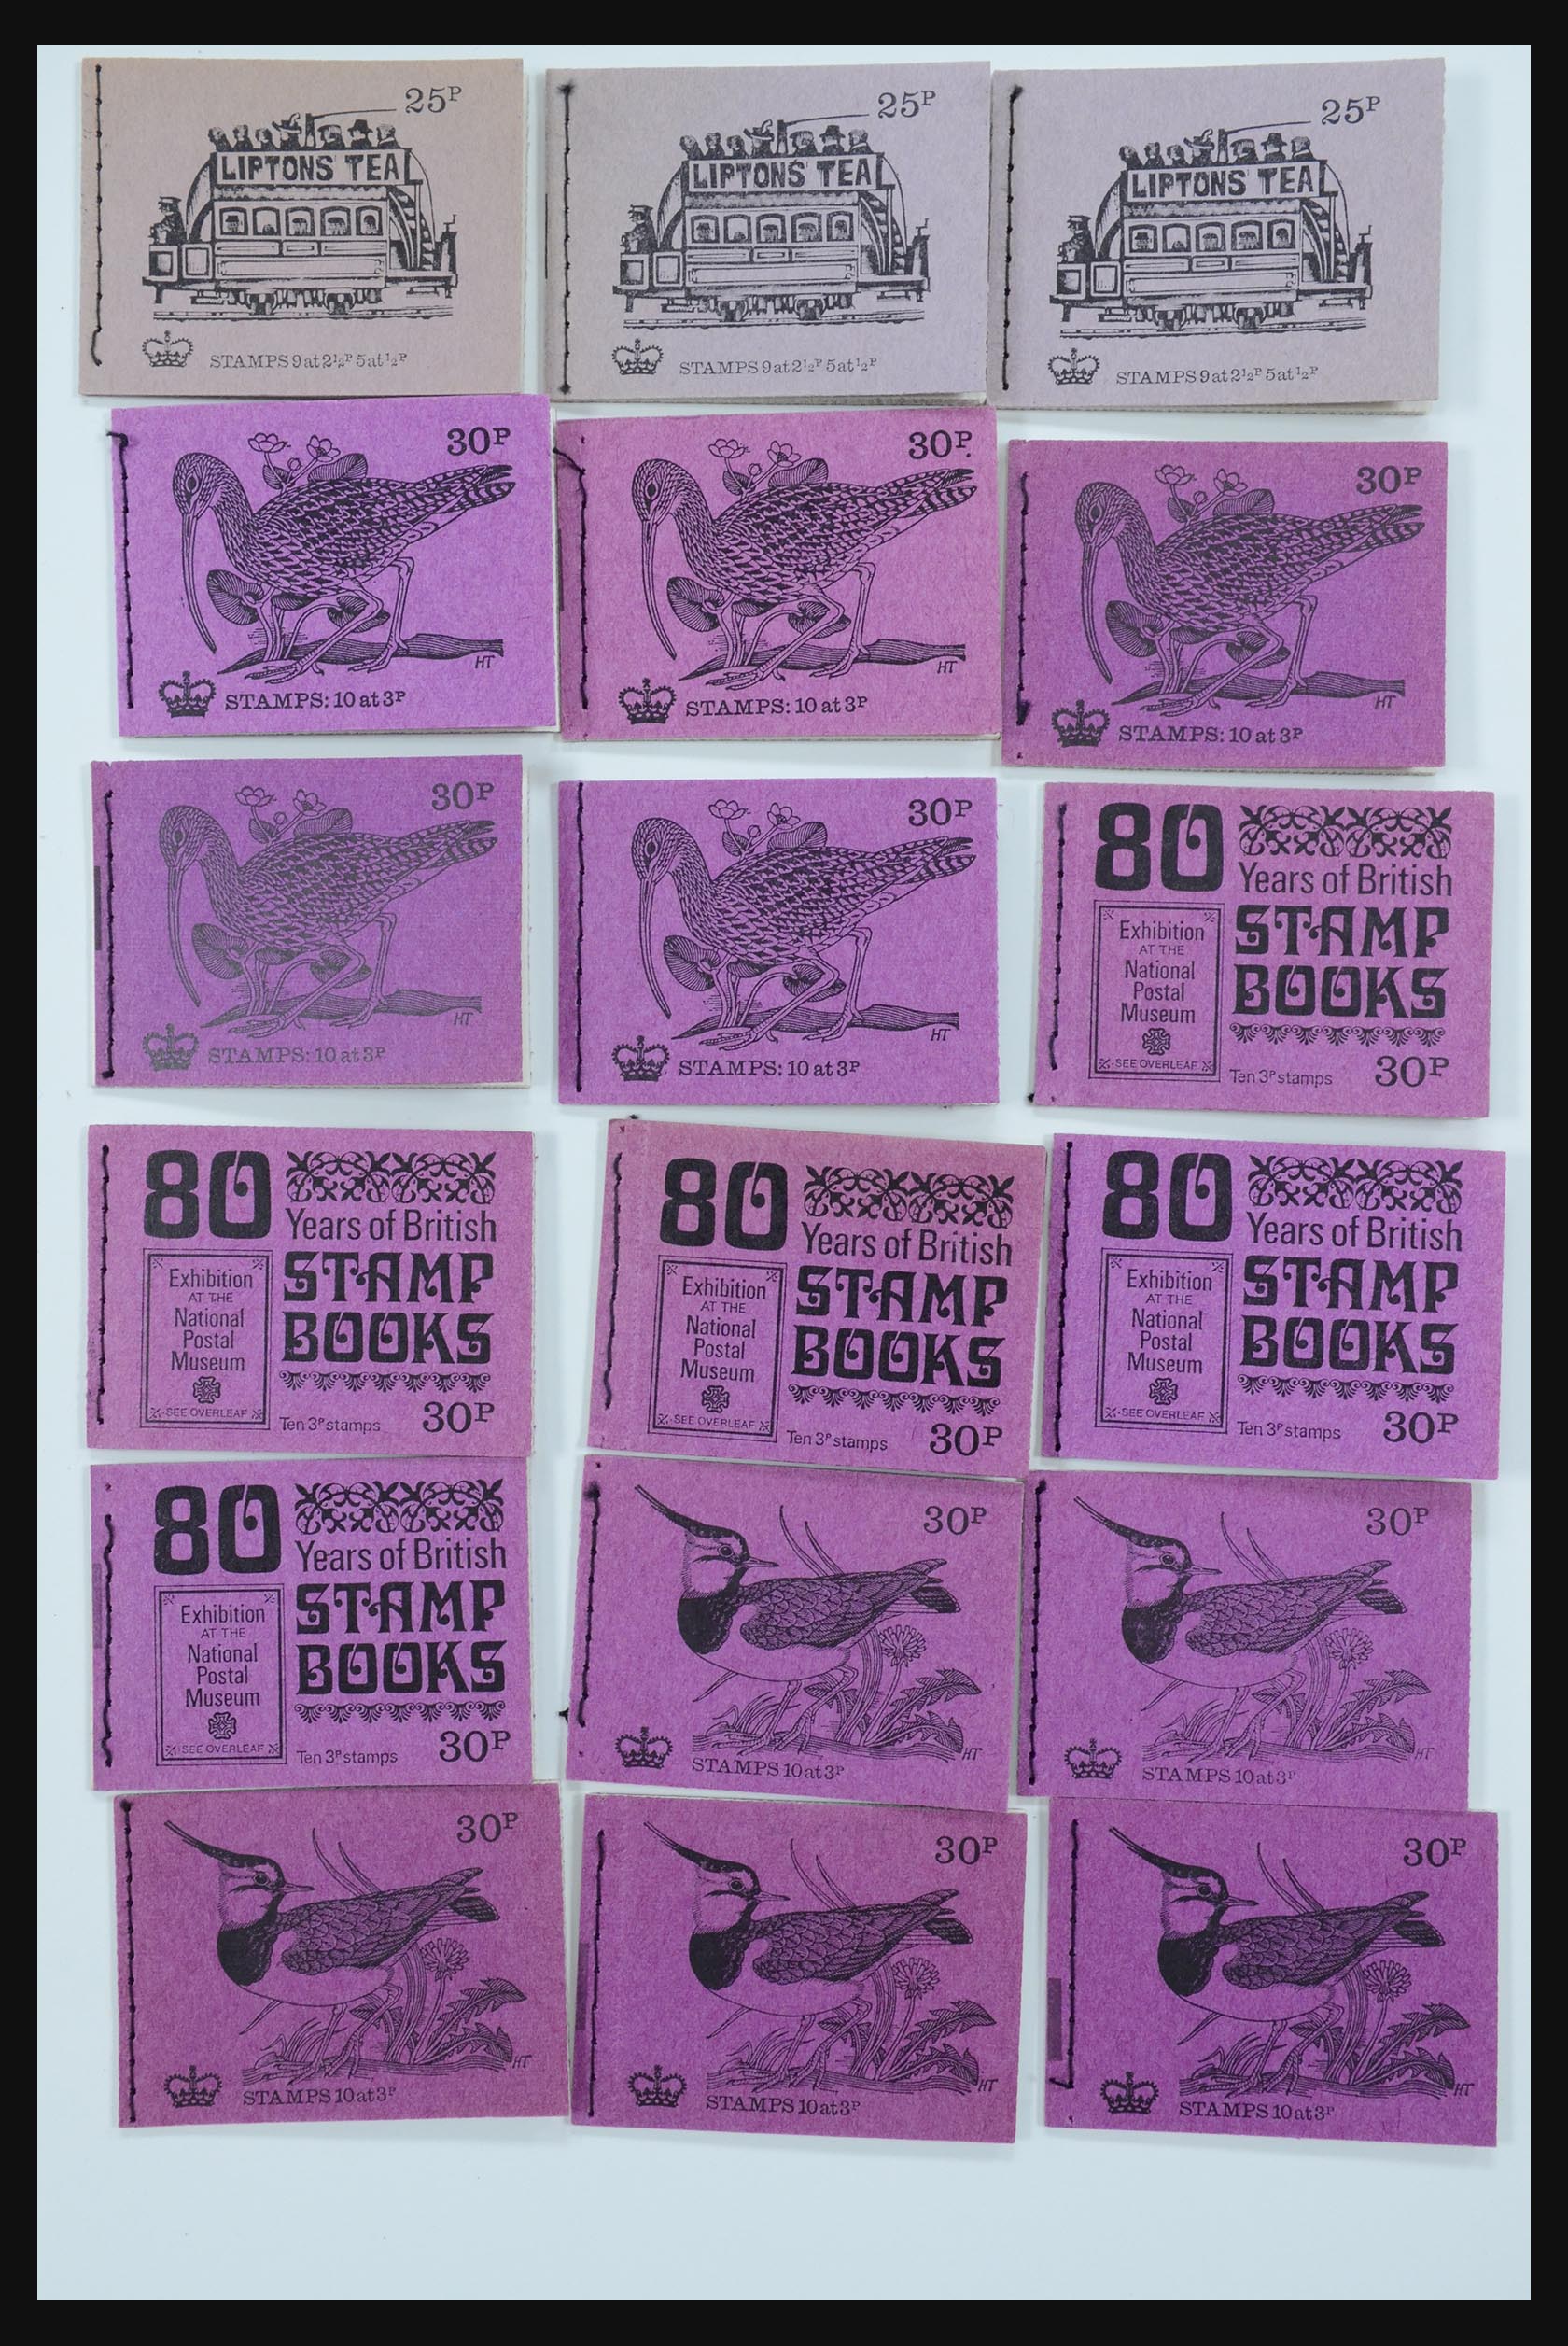 31961 013 - 31961 Great Britain stampbooklets 1971-1999.